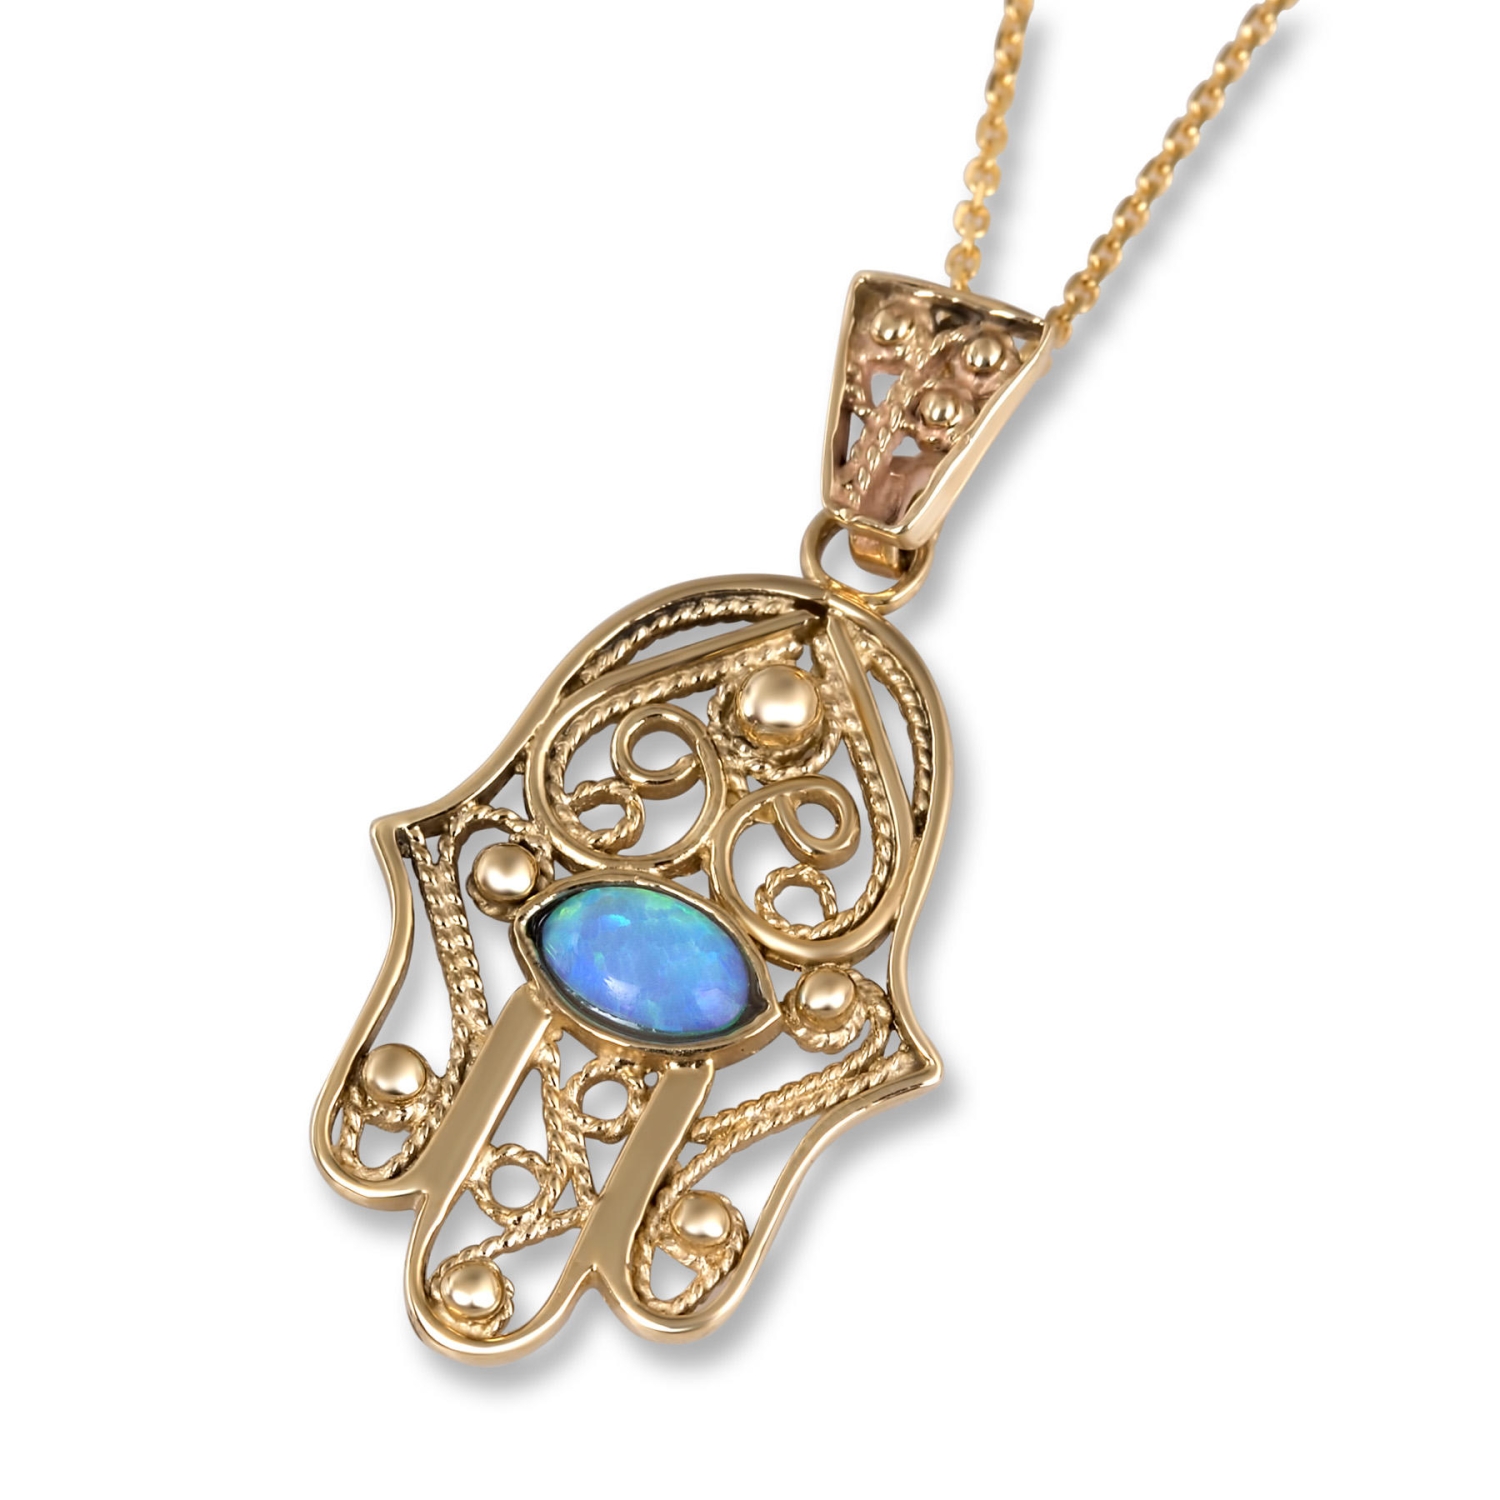 14K Gold Filigree Hamsa Pendant Necklace with Blue Opal - 1